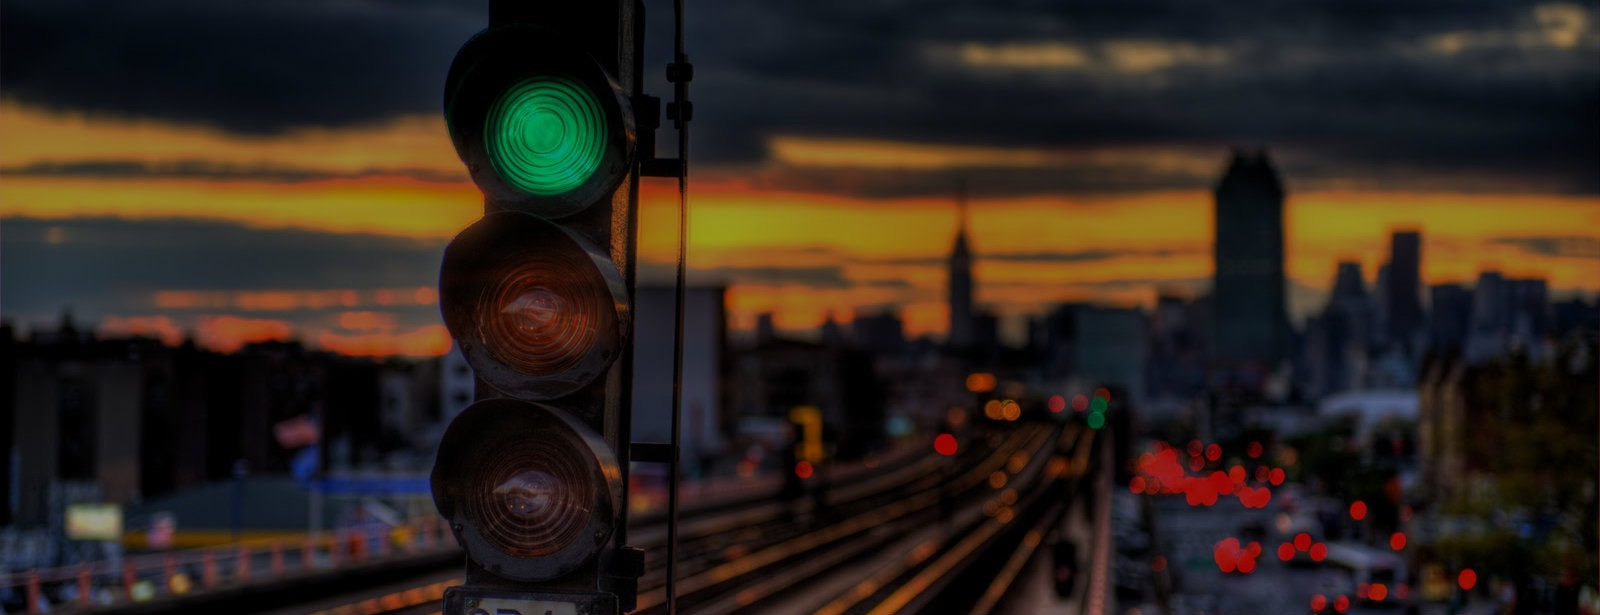 Railway signal lights